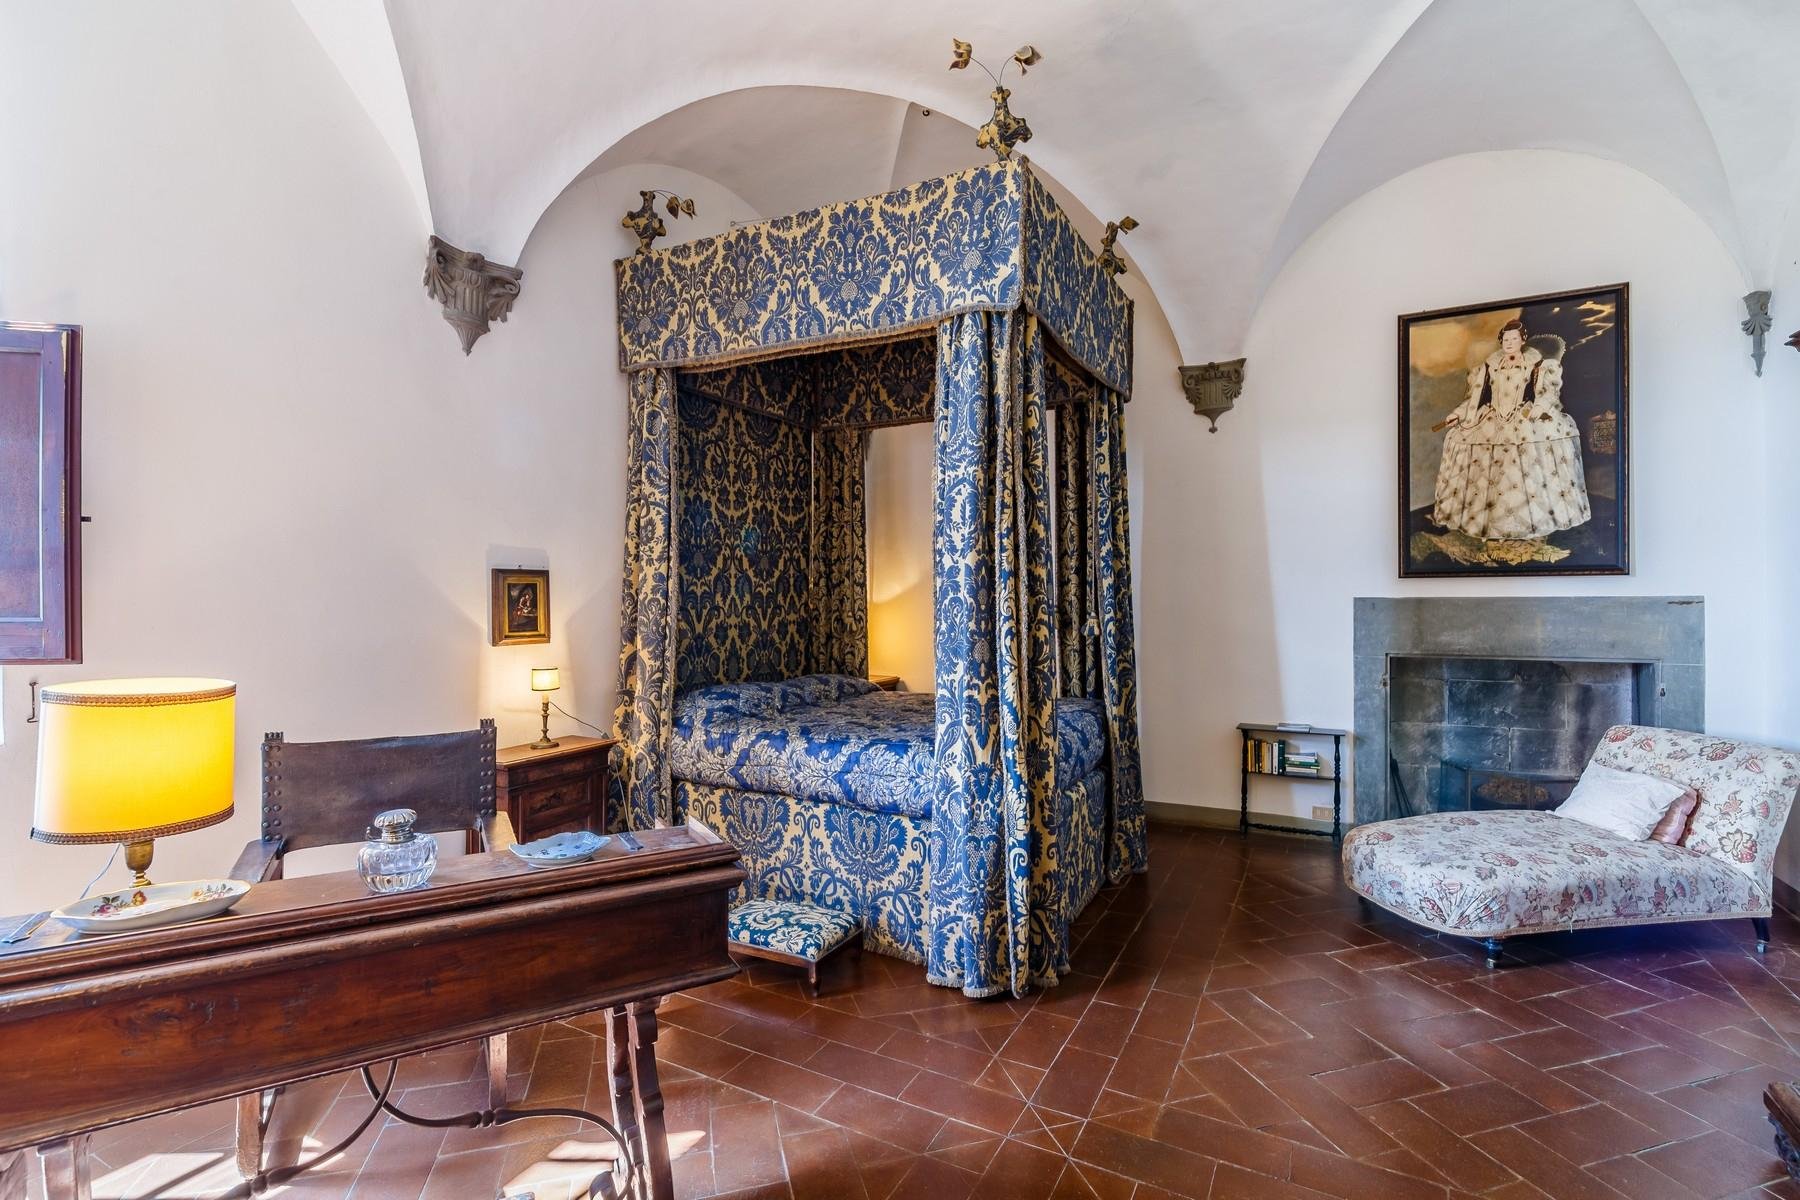 Francis York Medieval Castle Turned Renaissance Villa in Tuscany, Italy  00014.jpg